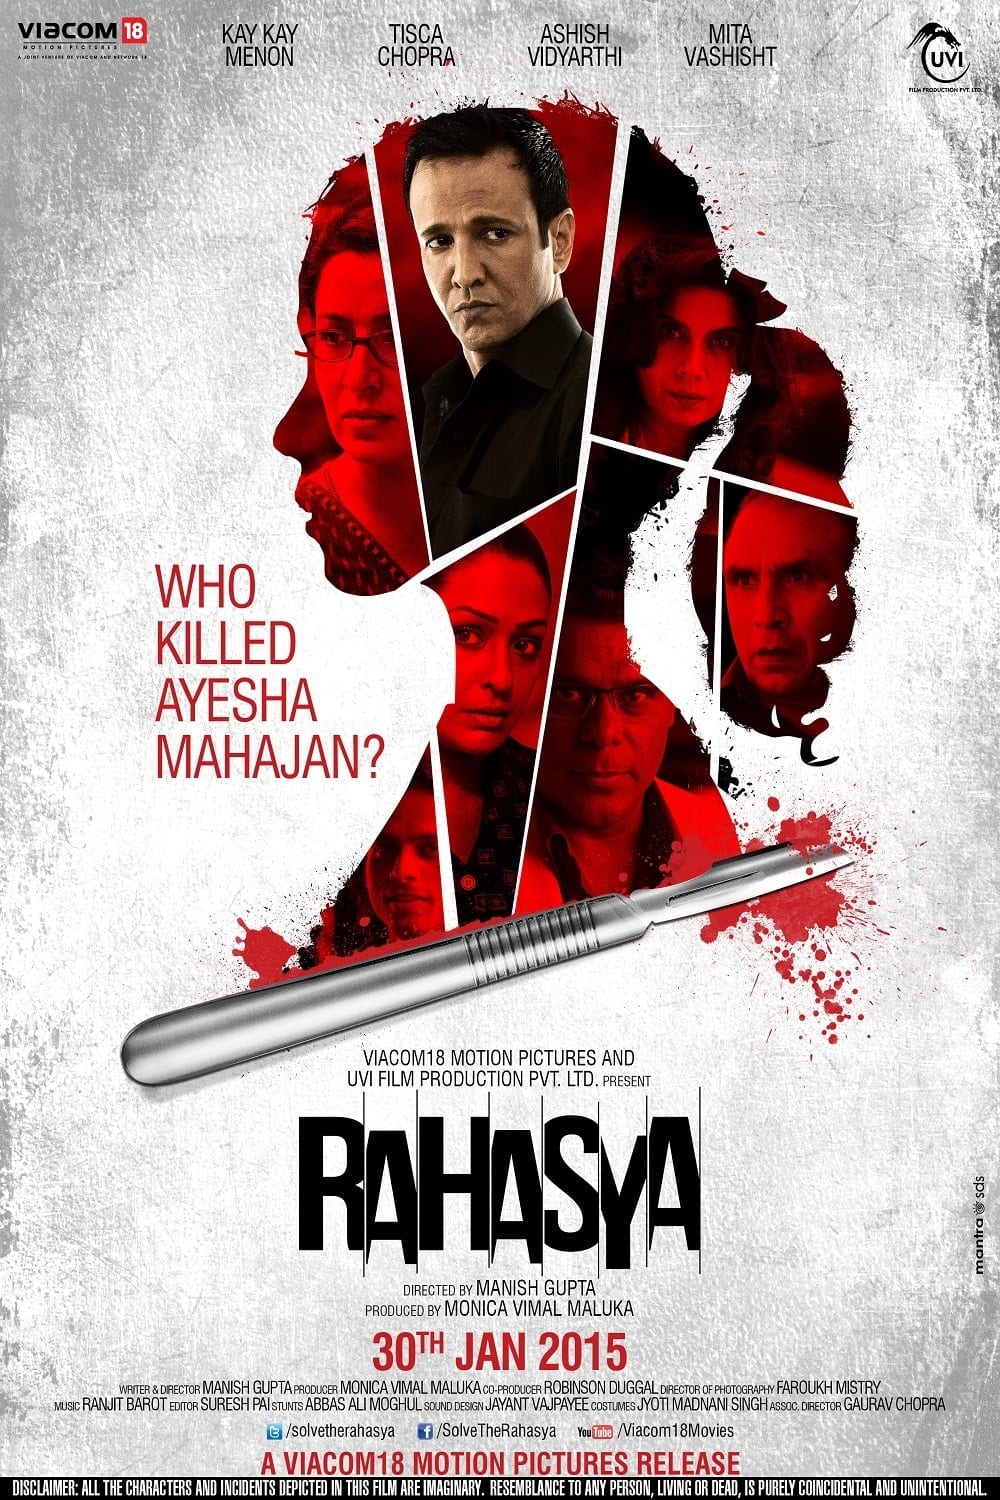 Poster for the movie "Rahasya"